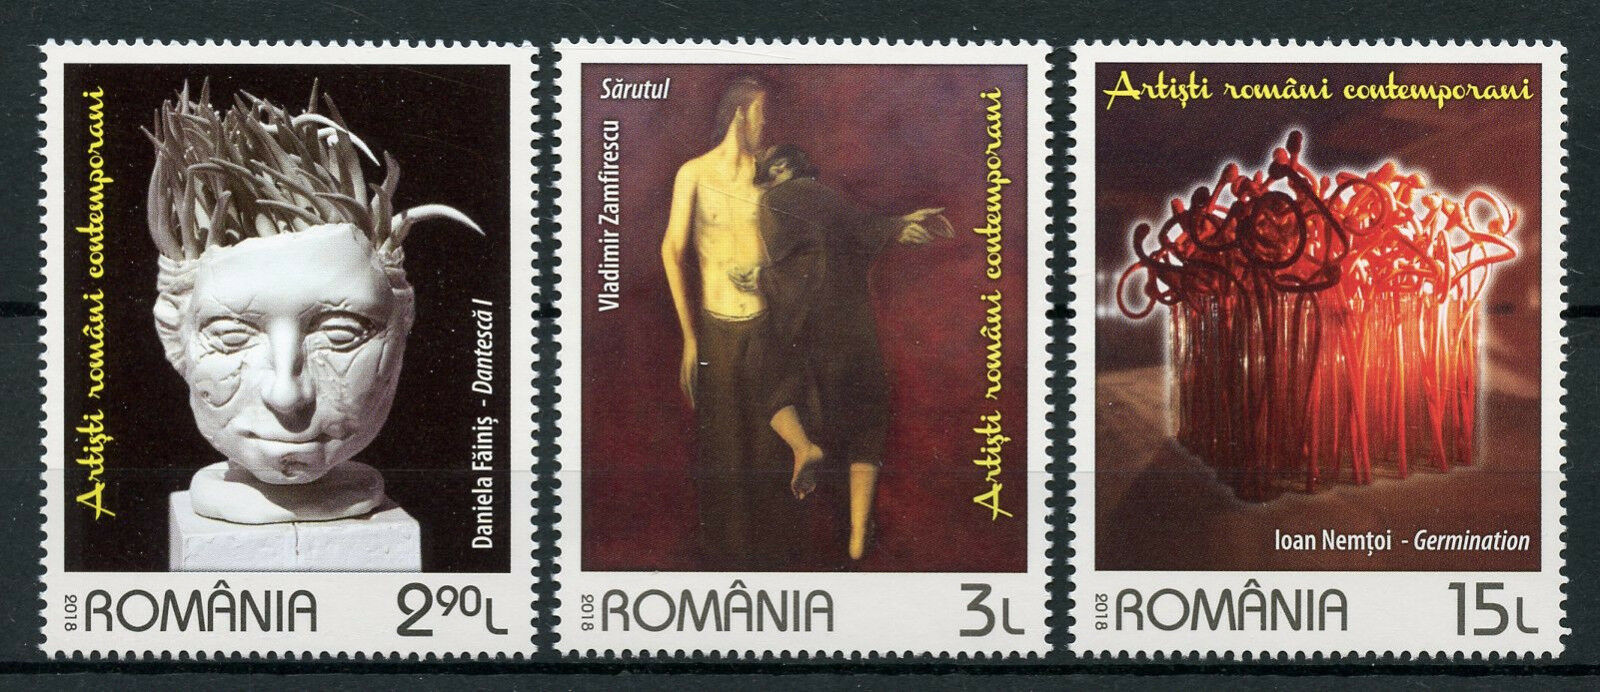 Romania 2018 MNH Contemporary Artists Vladimir Zamfirescu 3v Set Art Stamps